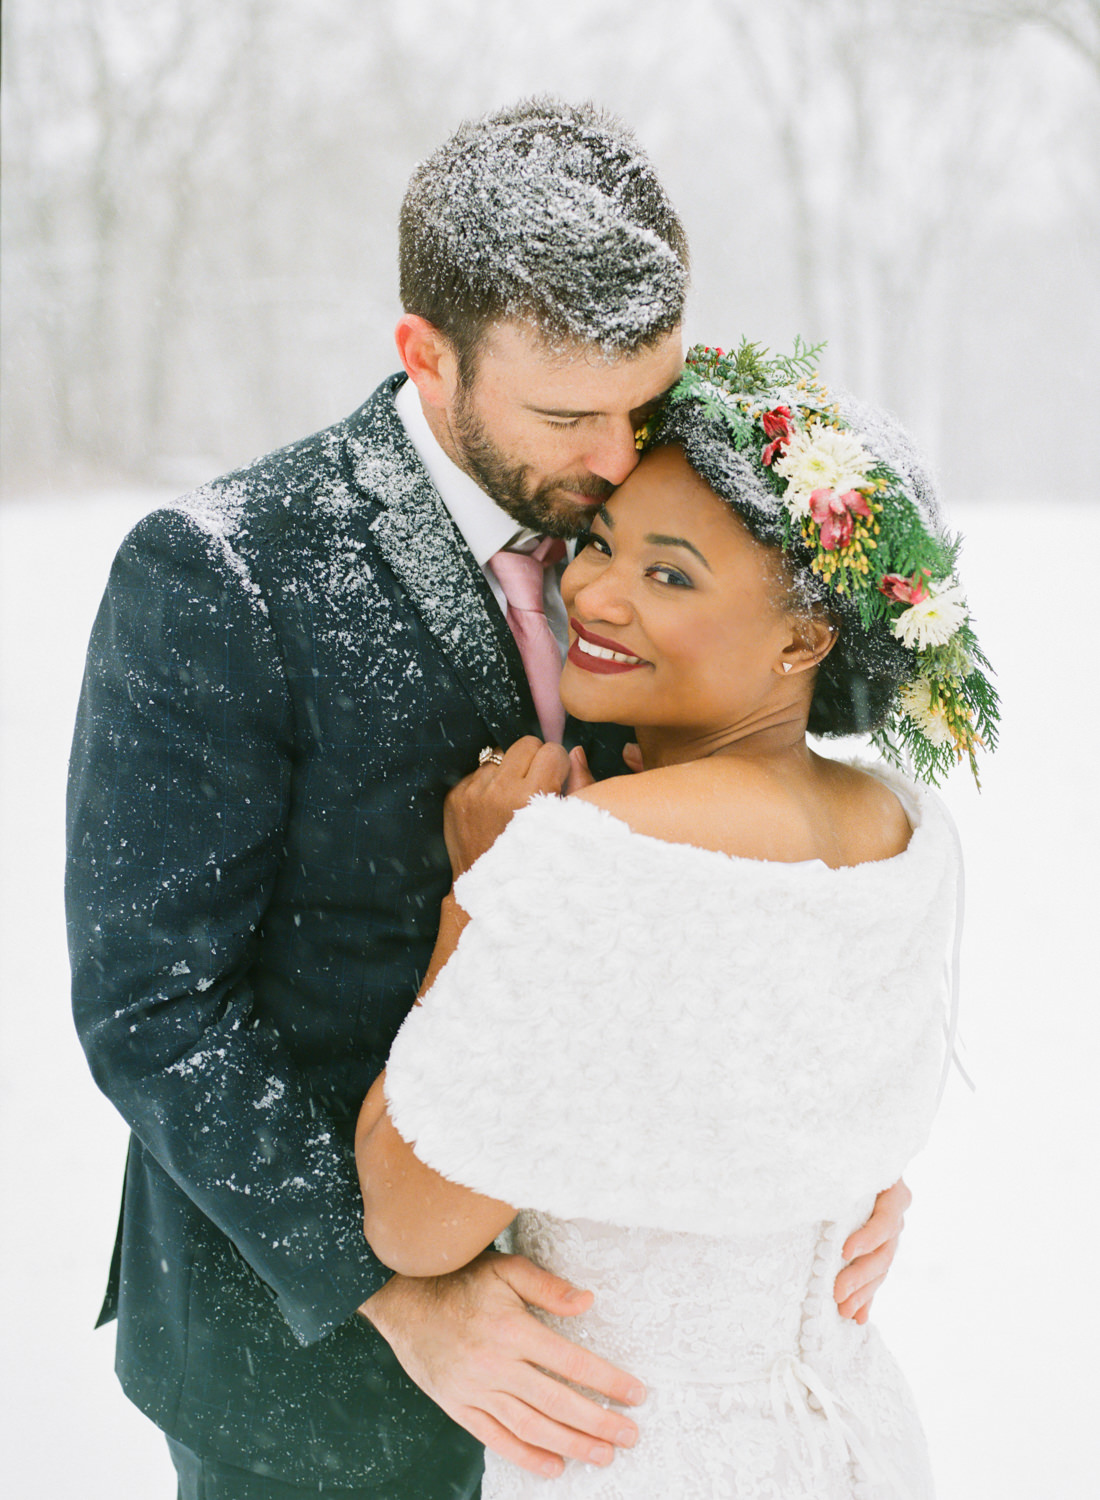 Winter wedding bride with flower crown and groom in snow; St. Louis fine art film wedding photographer Erica Robnett Photography